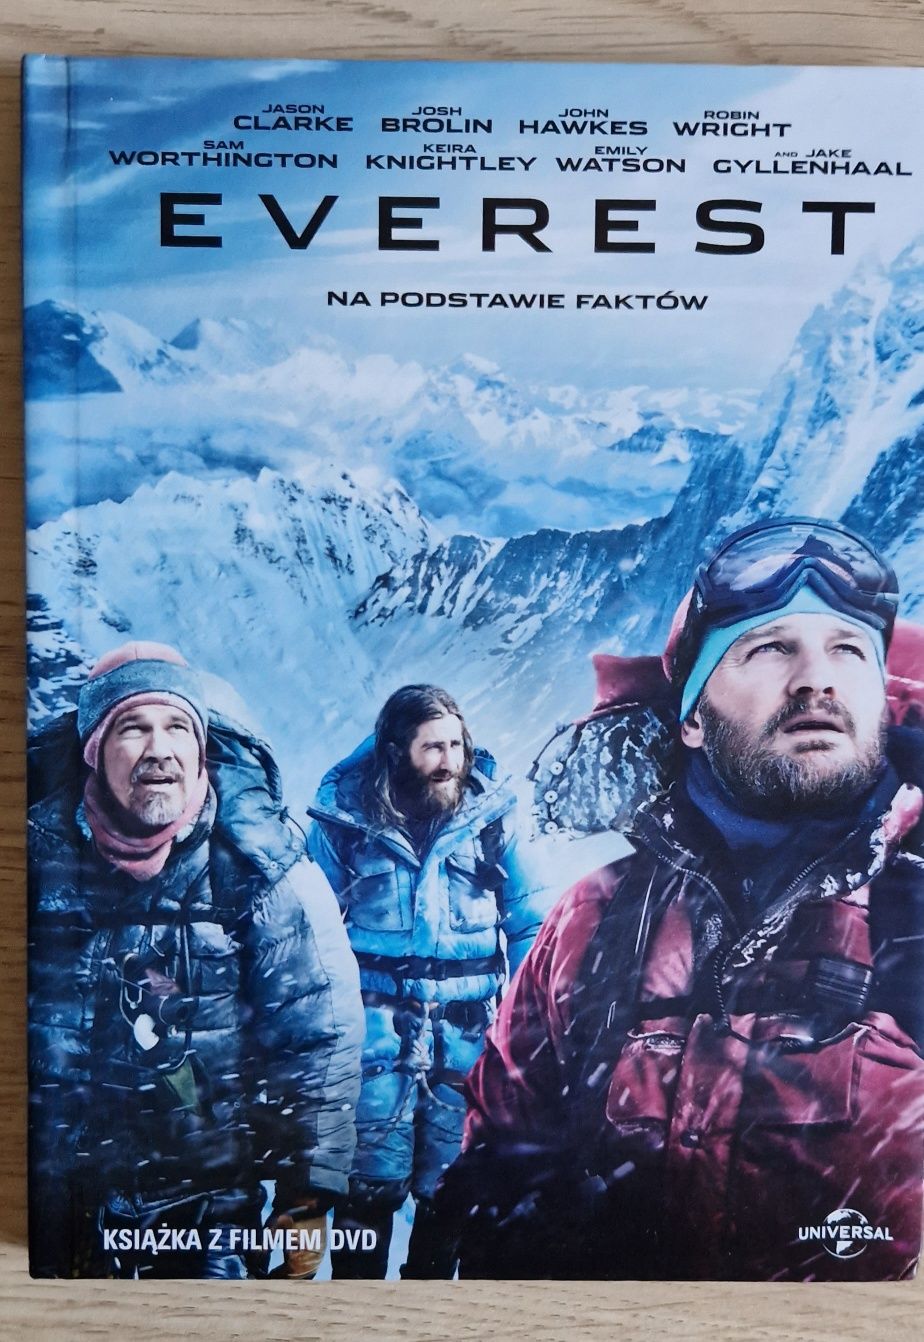 Film DVD "Everest"